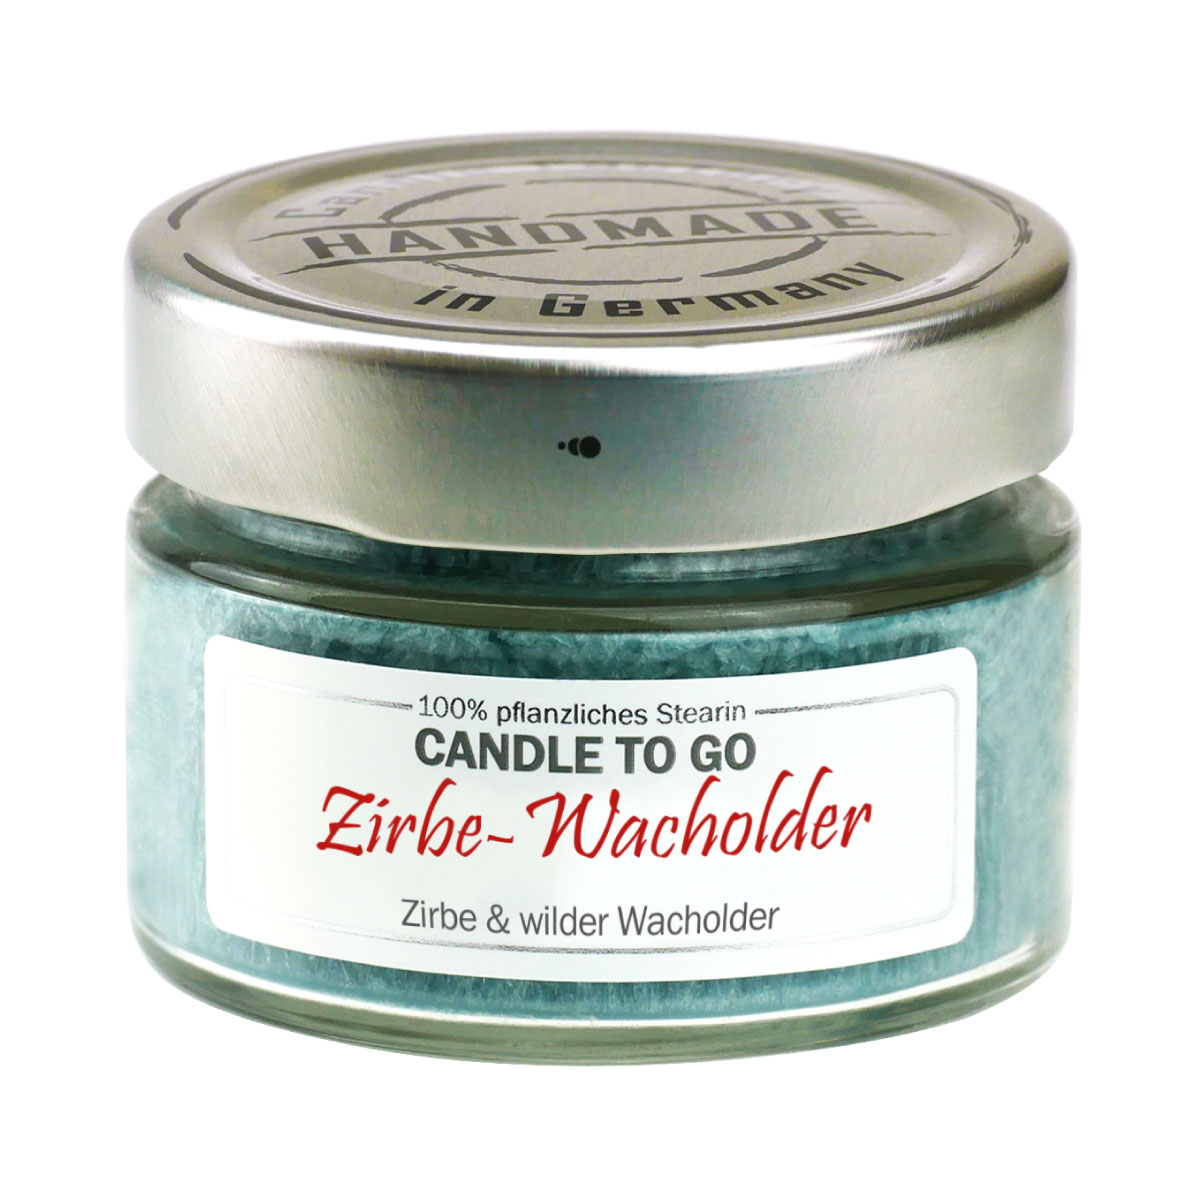 Zirbe Wacholder - Candle to Go Duftkerze von Candle Factory